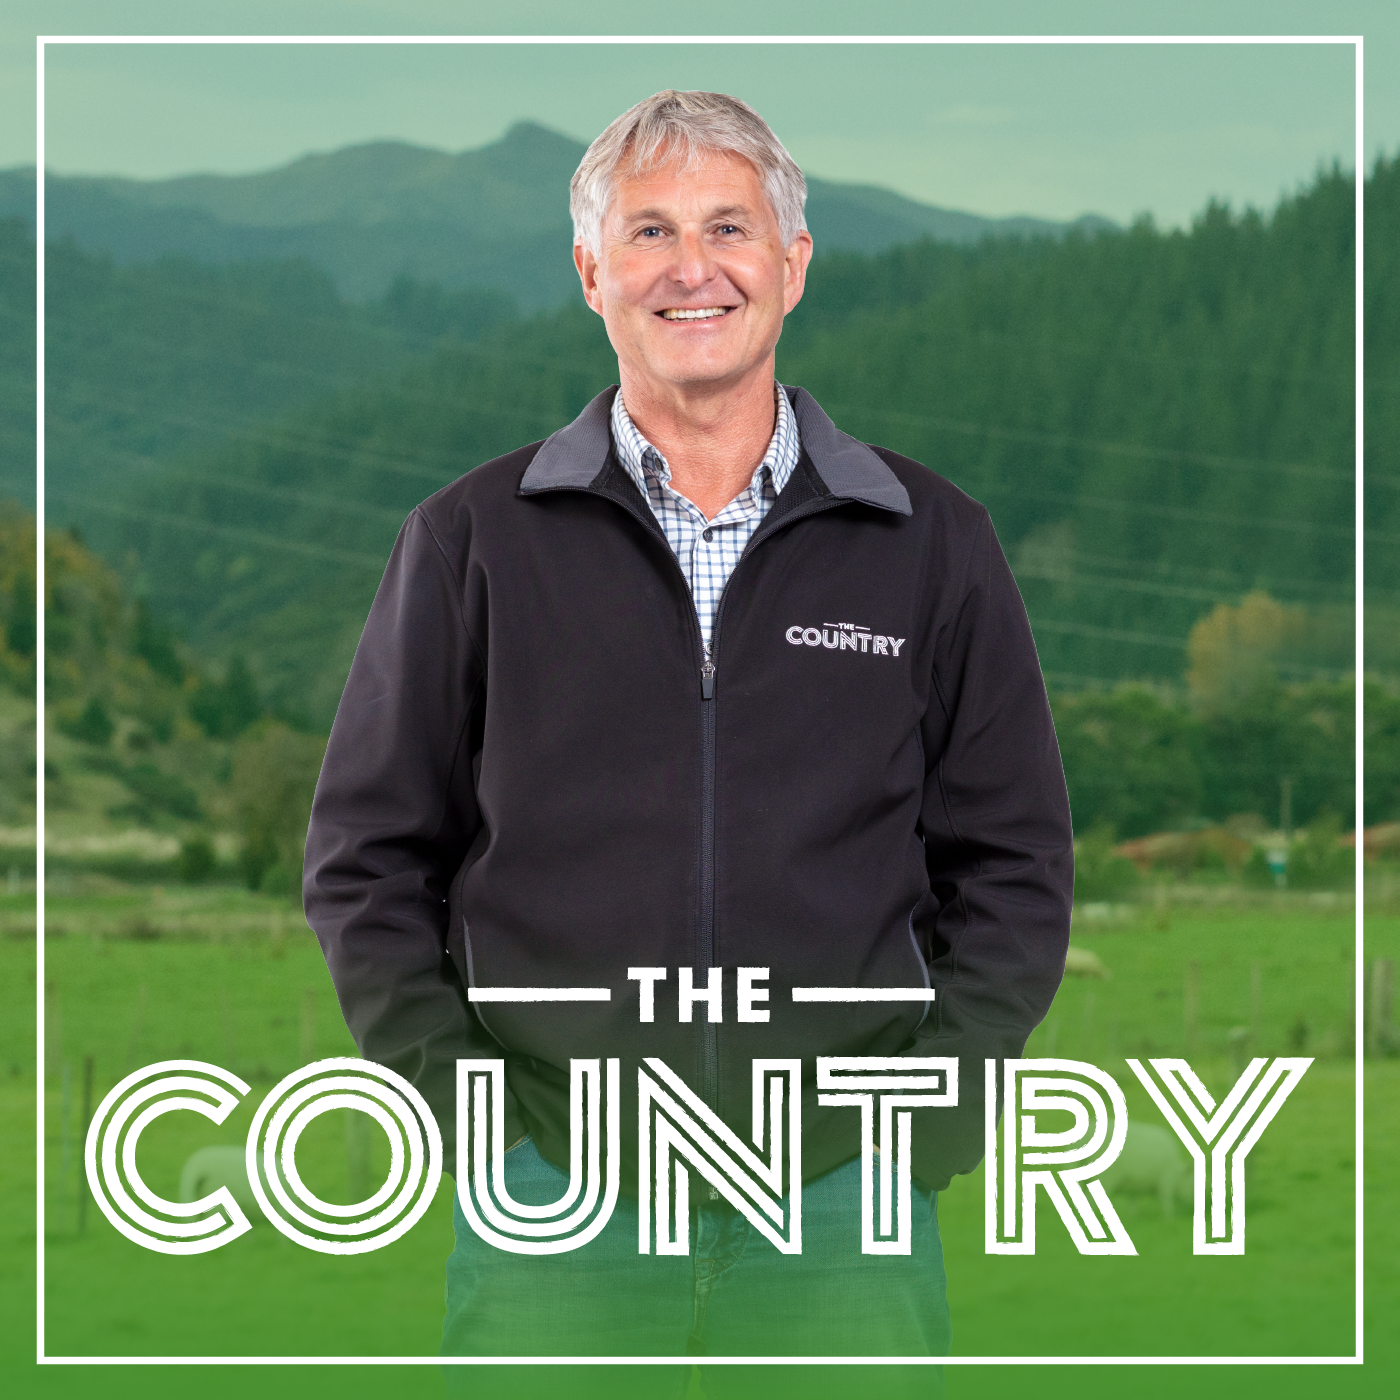 The Country 27/10/22: Todd Charteris and Sarah Peake talk to Jamie Mackay